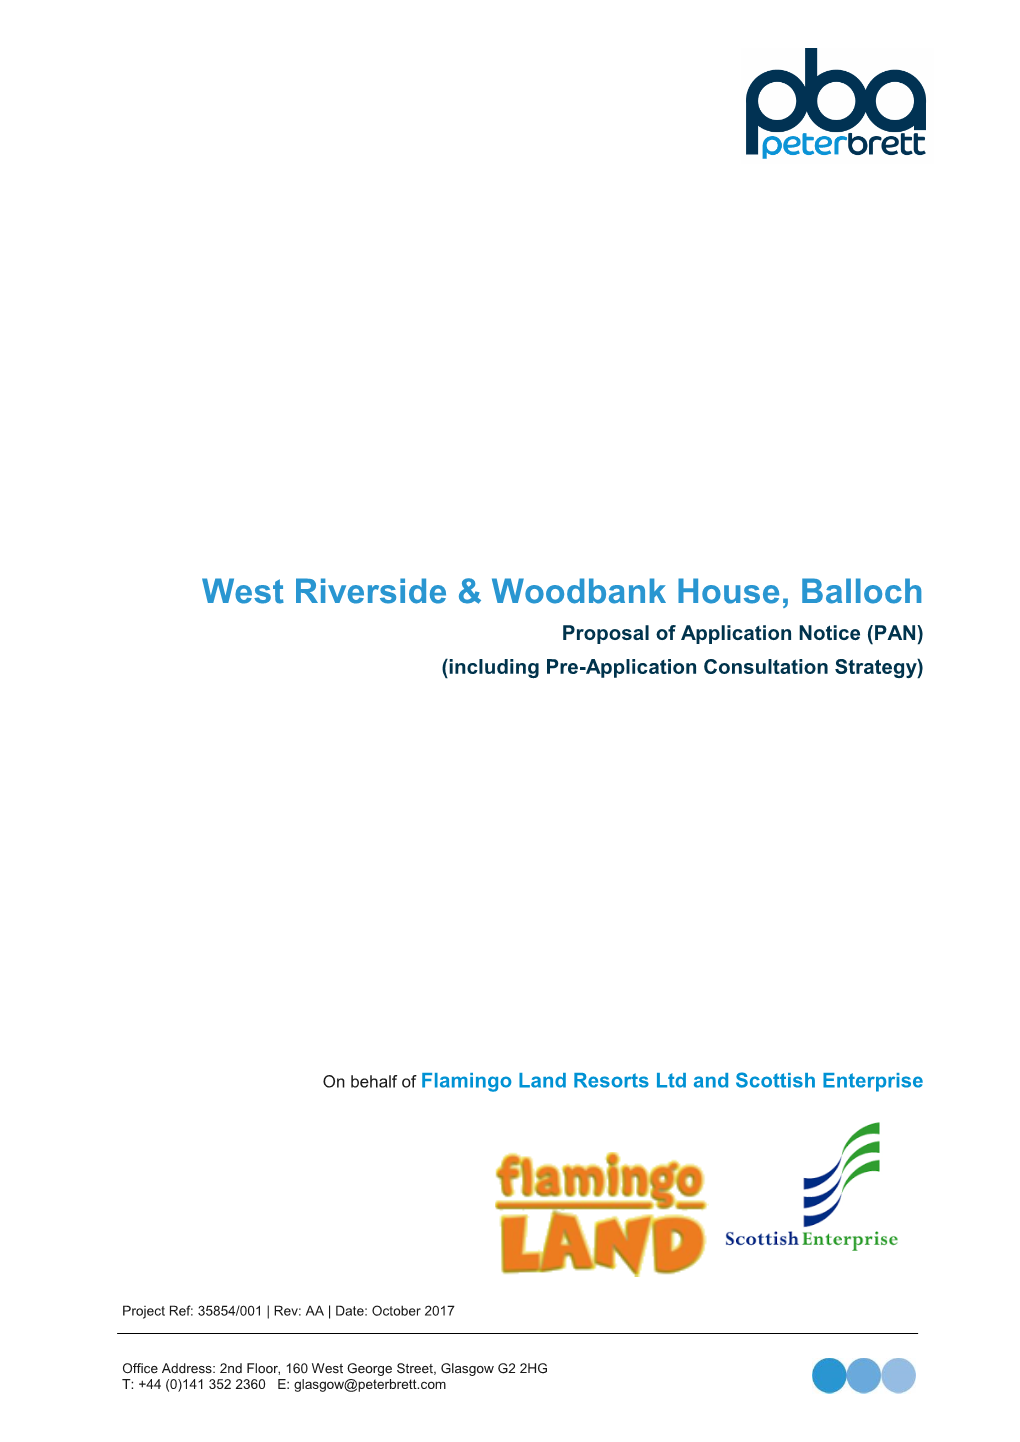 West Riverside & Woodbank House PAN Final Full 06102017